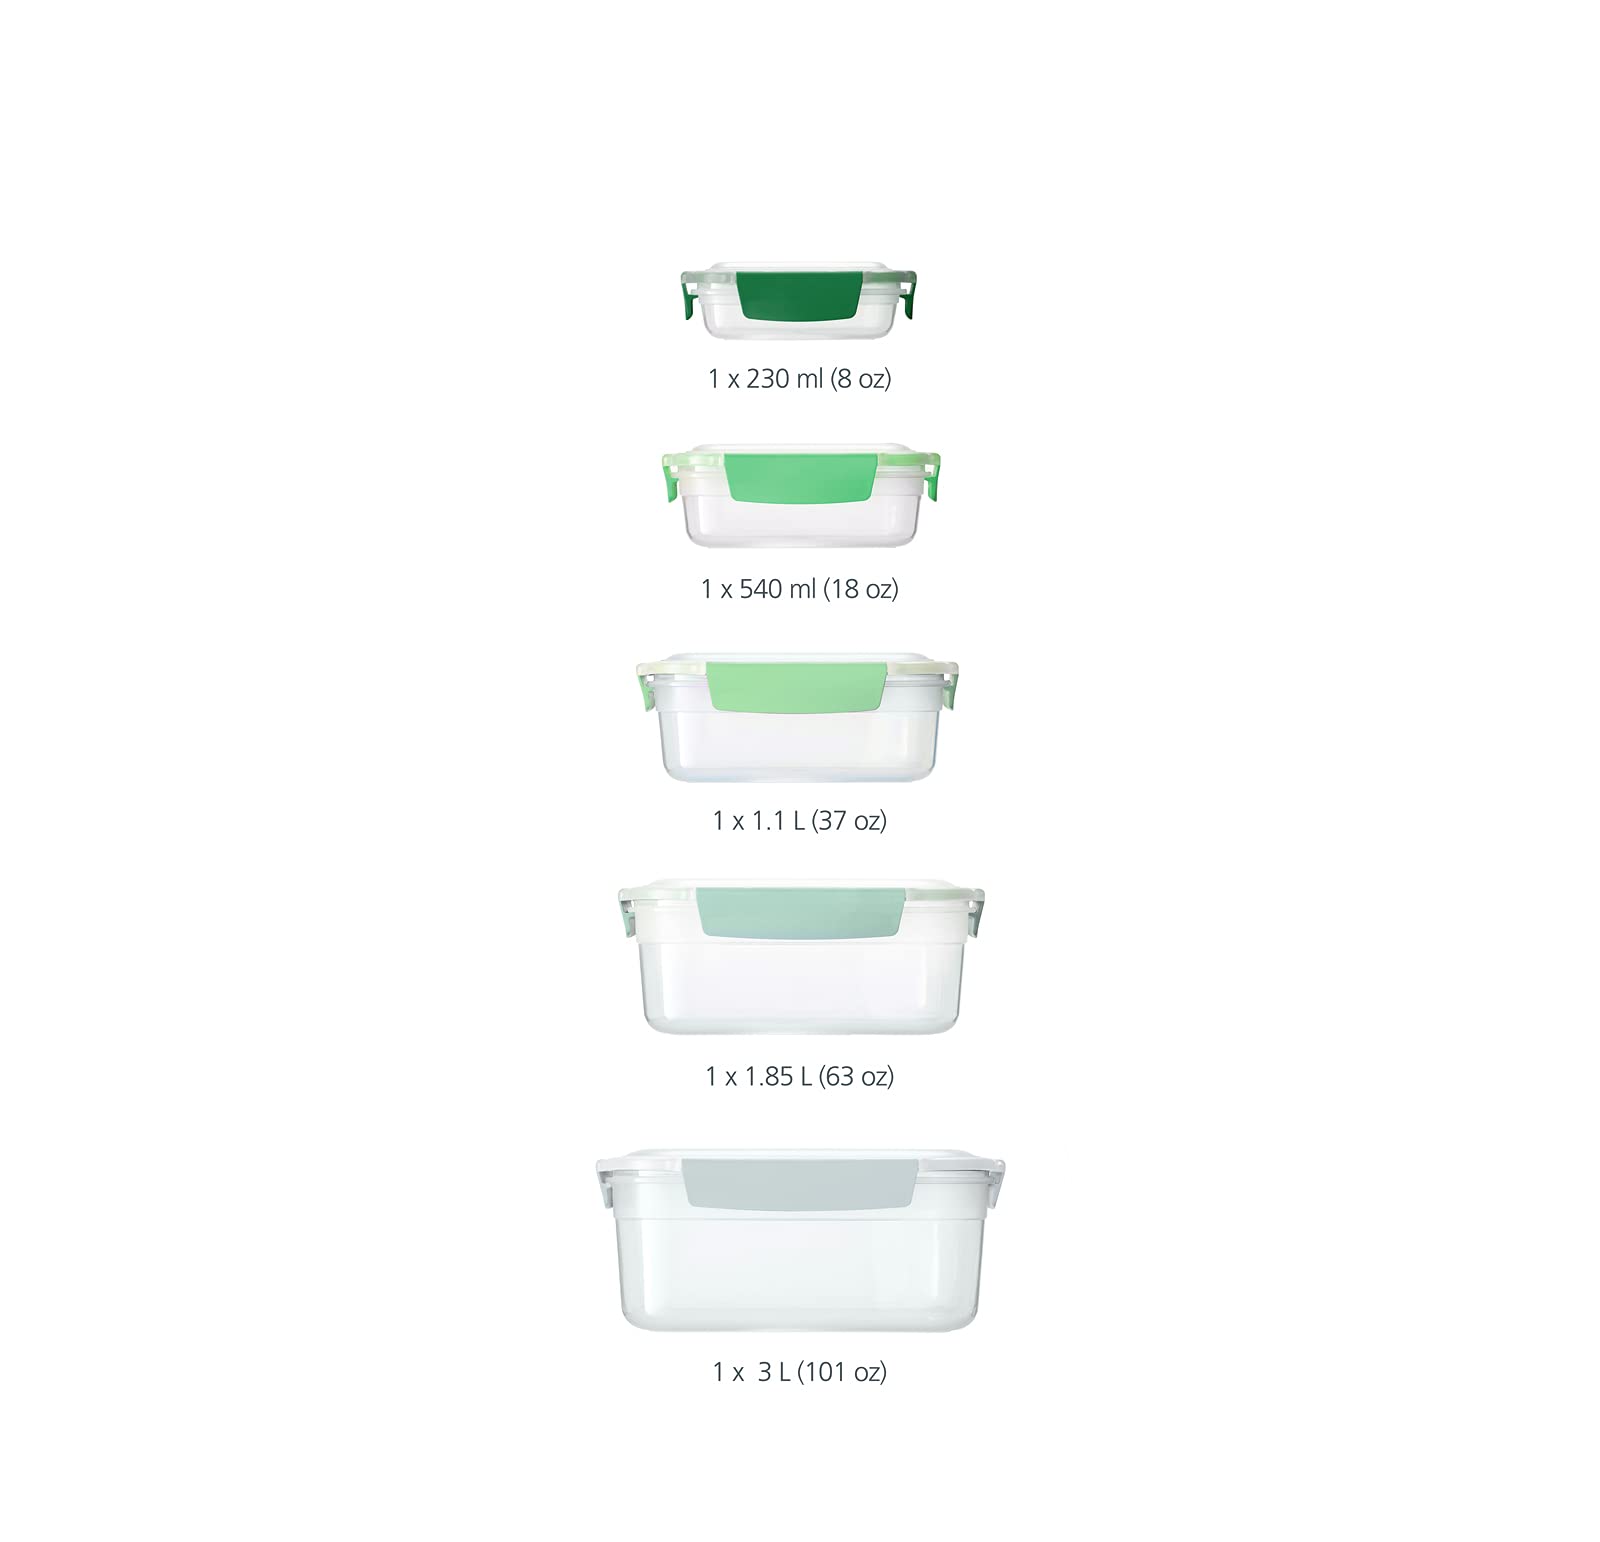 Joseph Joseph Nest Lock, 5 Piece Plastic Food Storage Container set with lids, Leak Proof, Airtight, Space Saving, Kitchen Storage - Sage Green